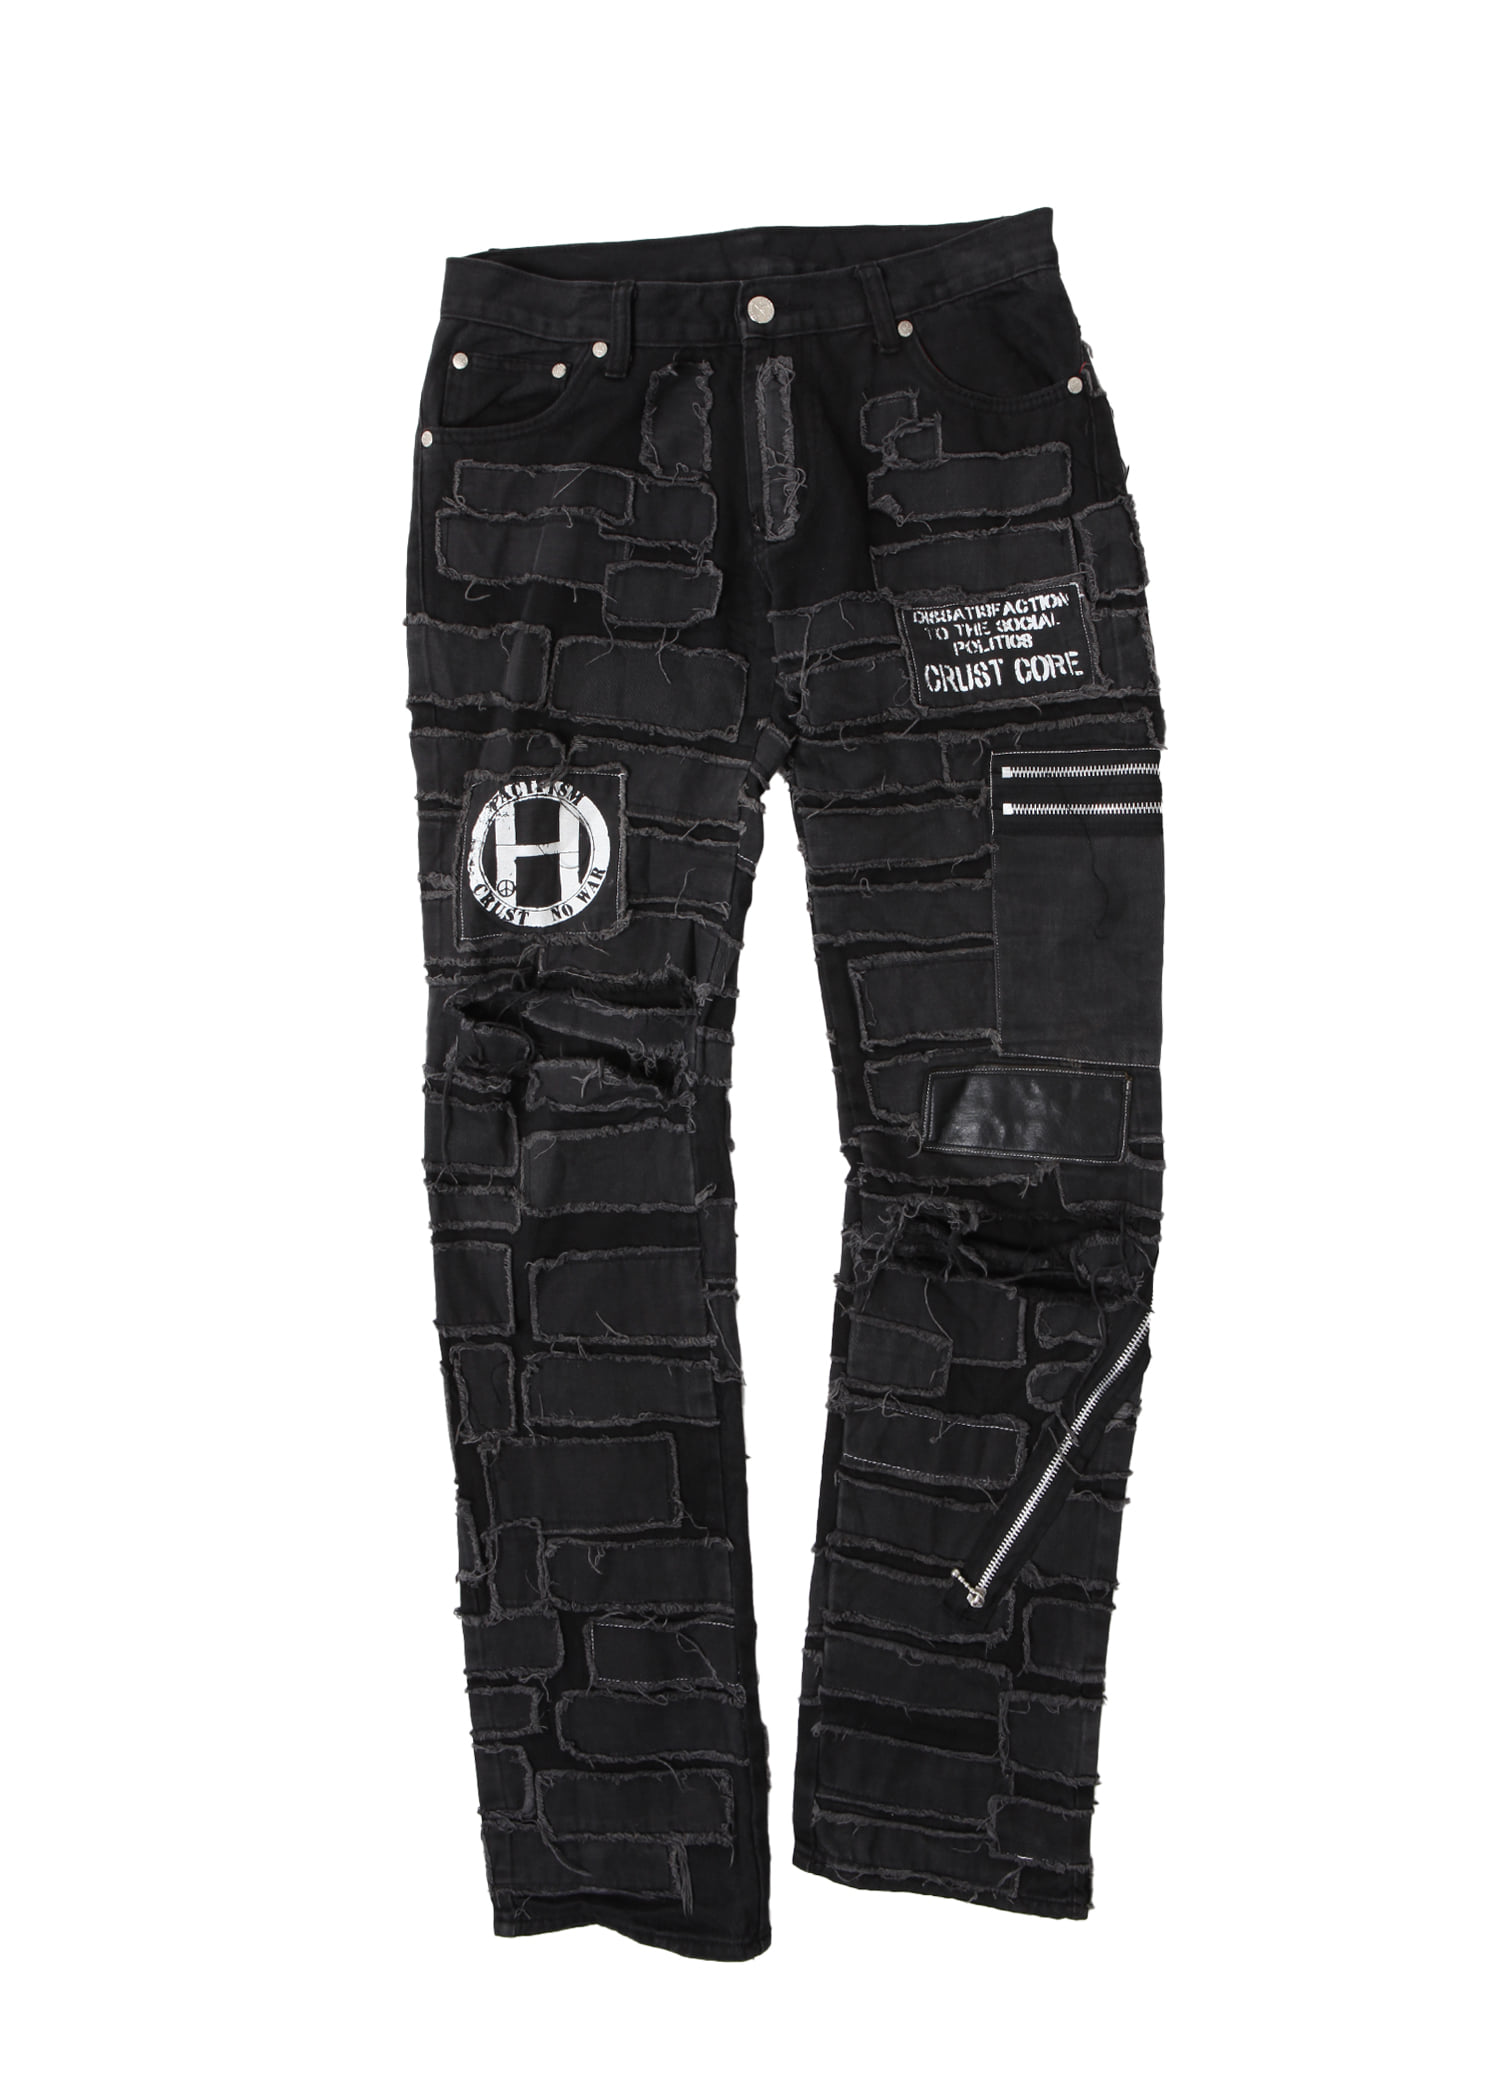 HIDER ROCK design punk pants